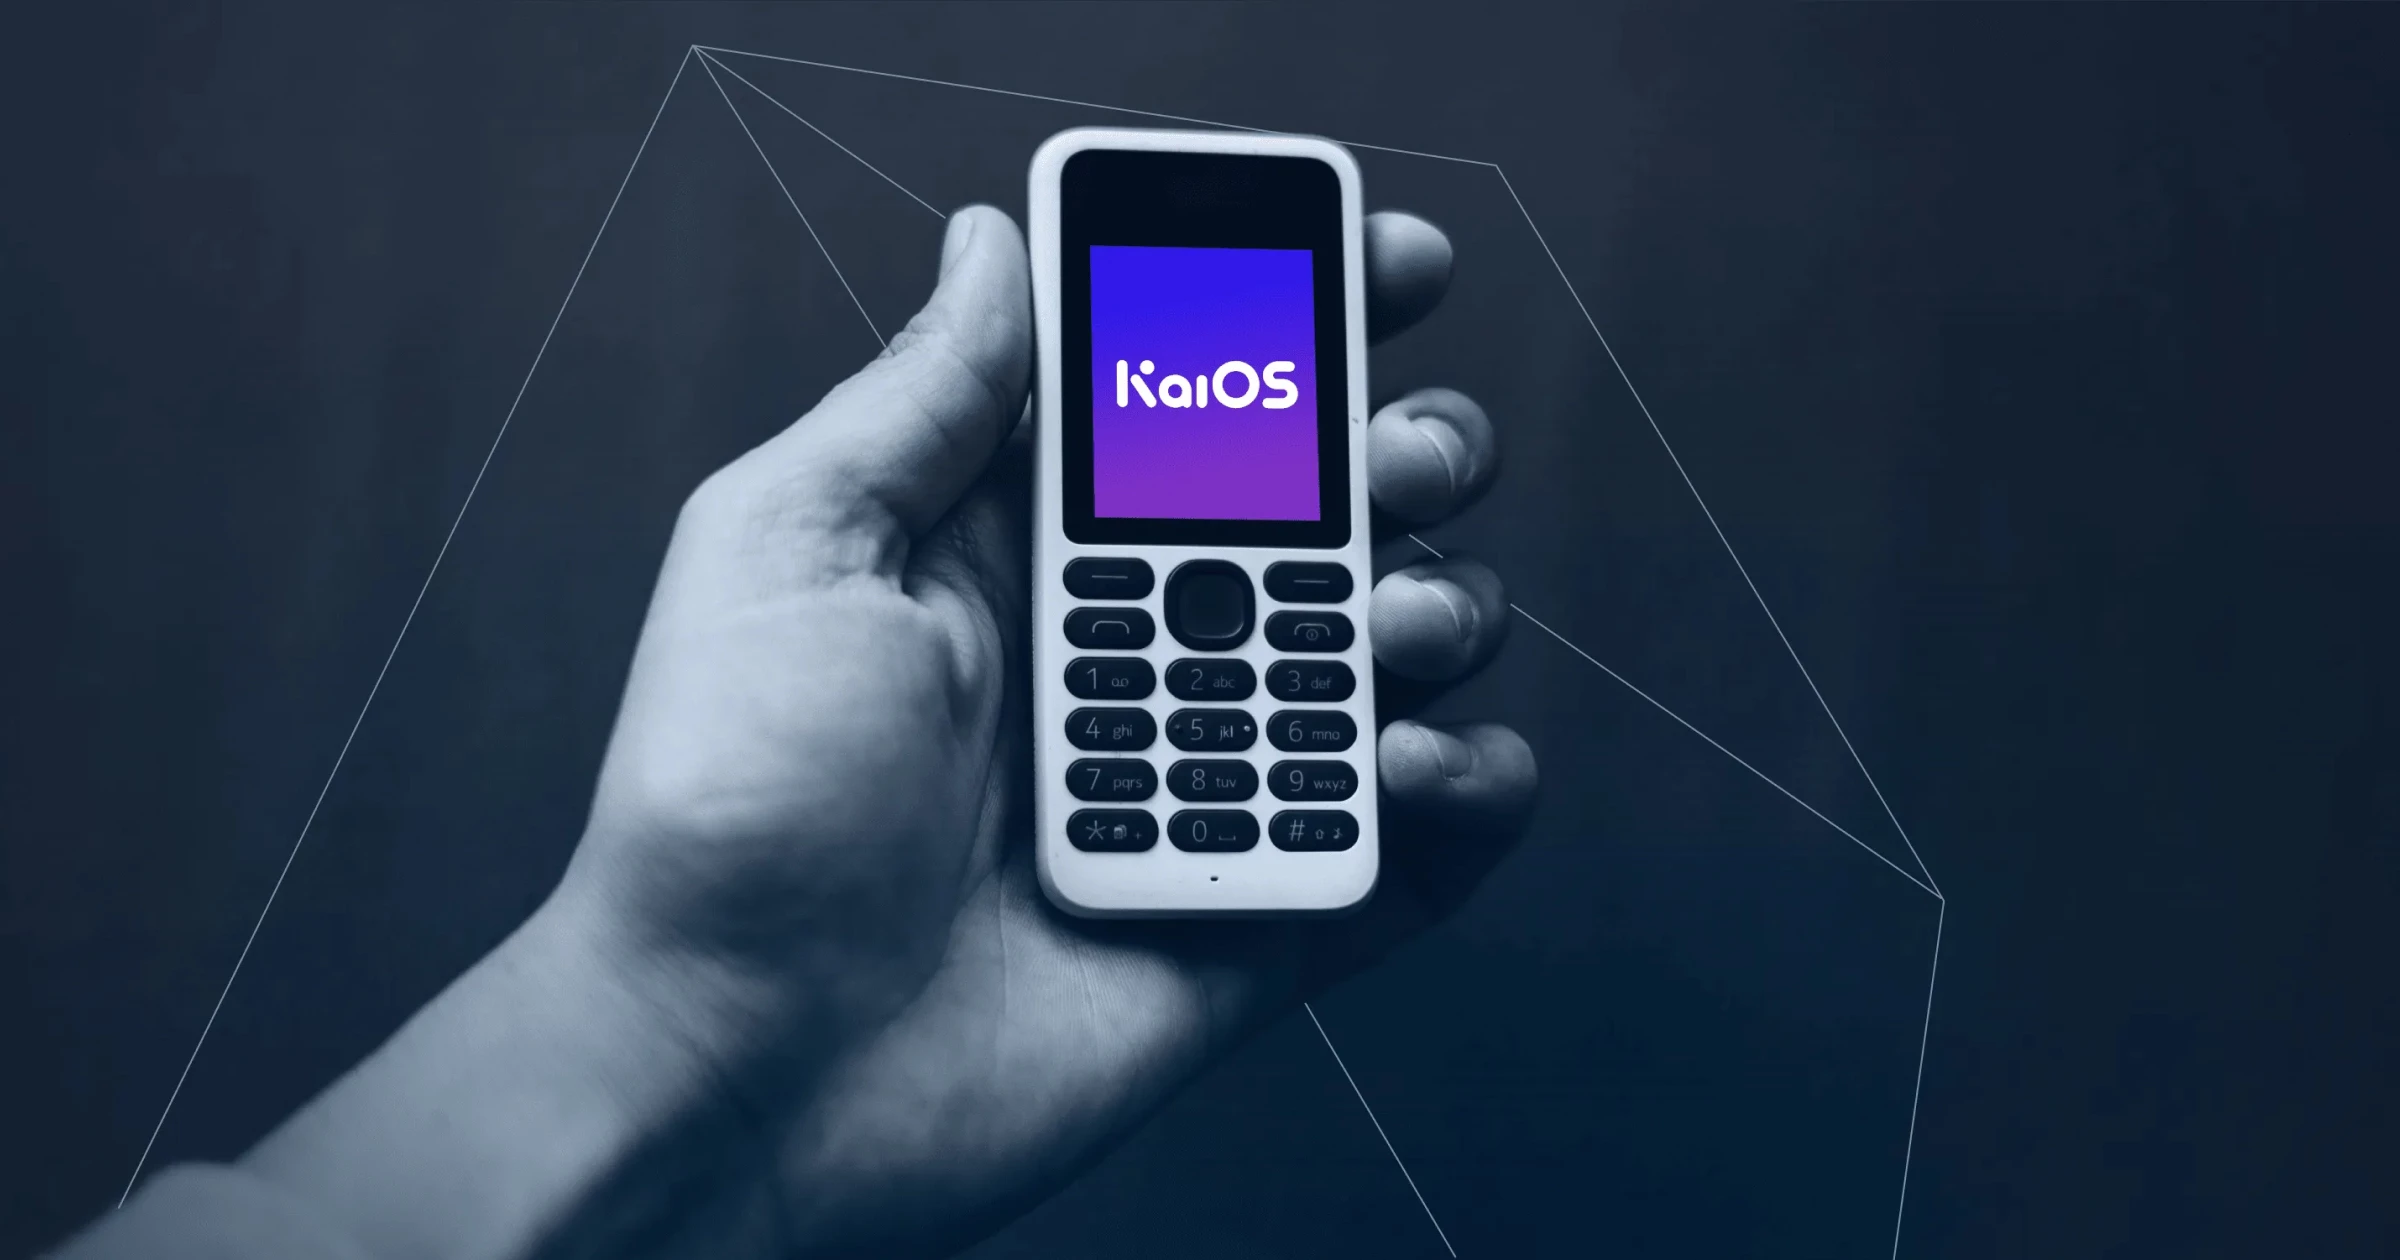 kaios-featured-image-min.webp